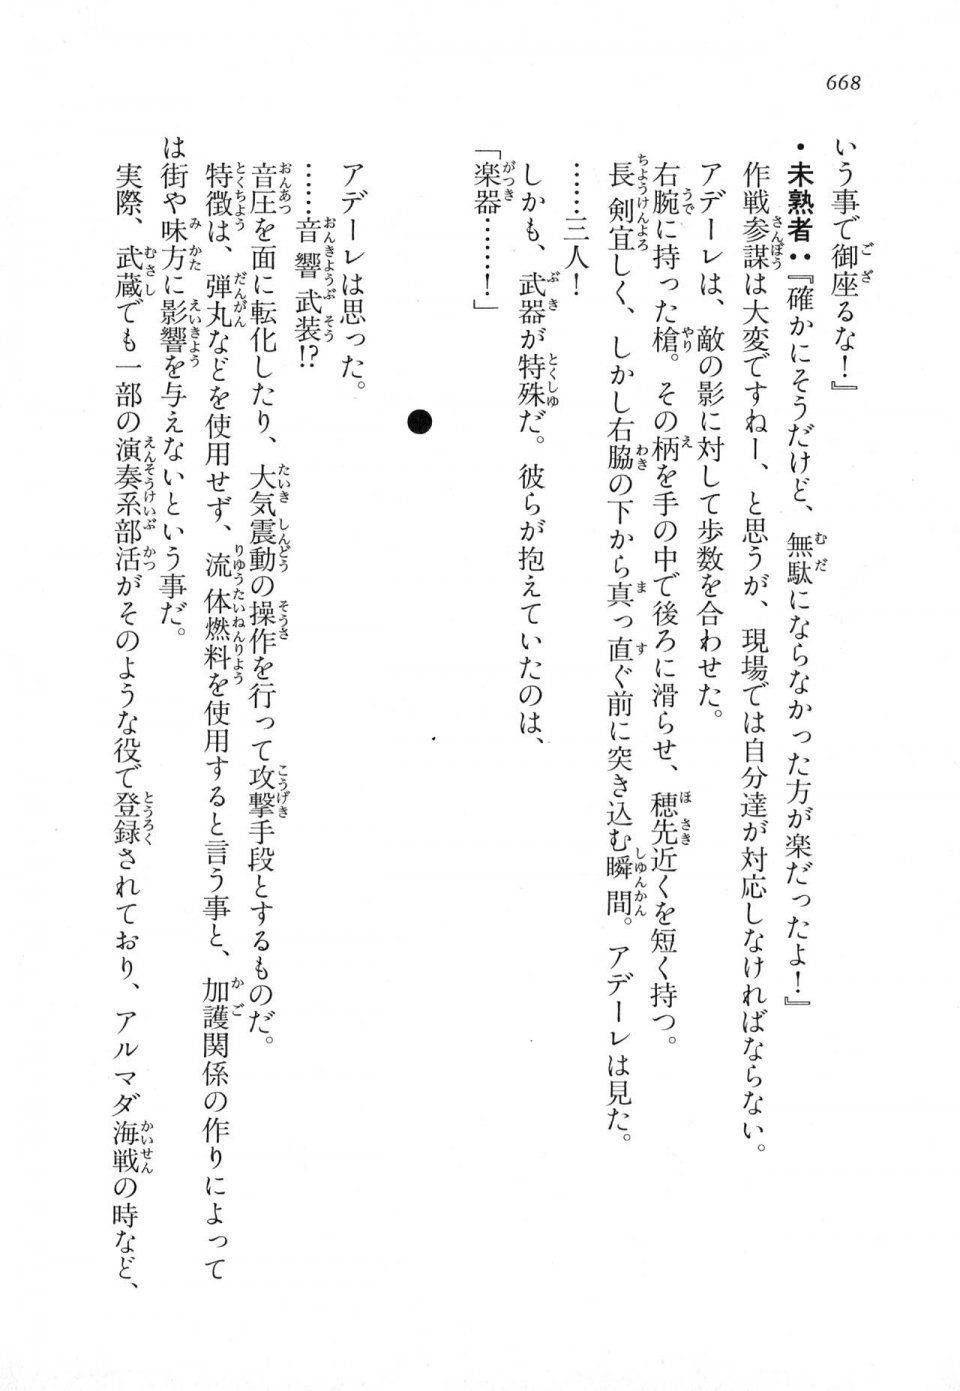 Kyoukai Senjou no Horizon LN Vol 18(7C) Part 2 - Photo #108